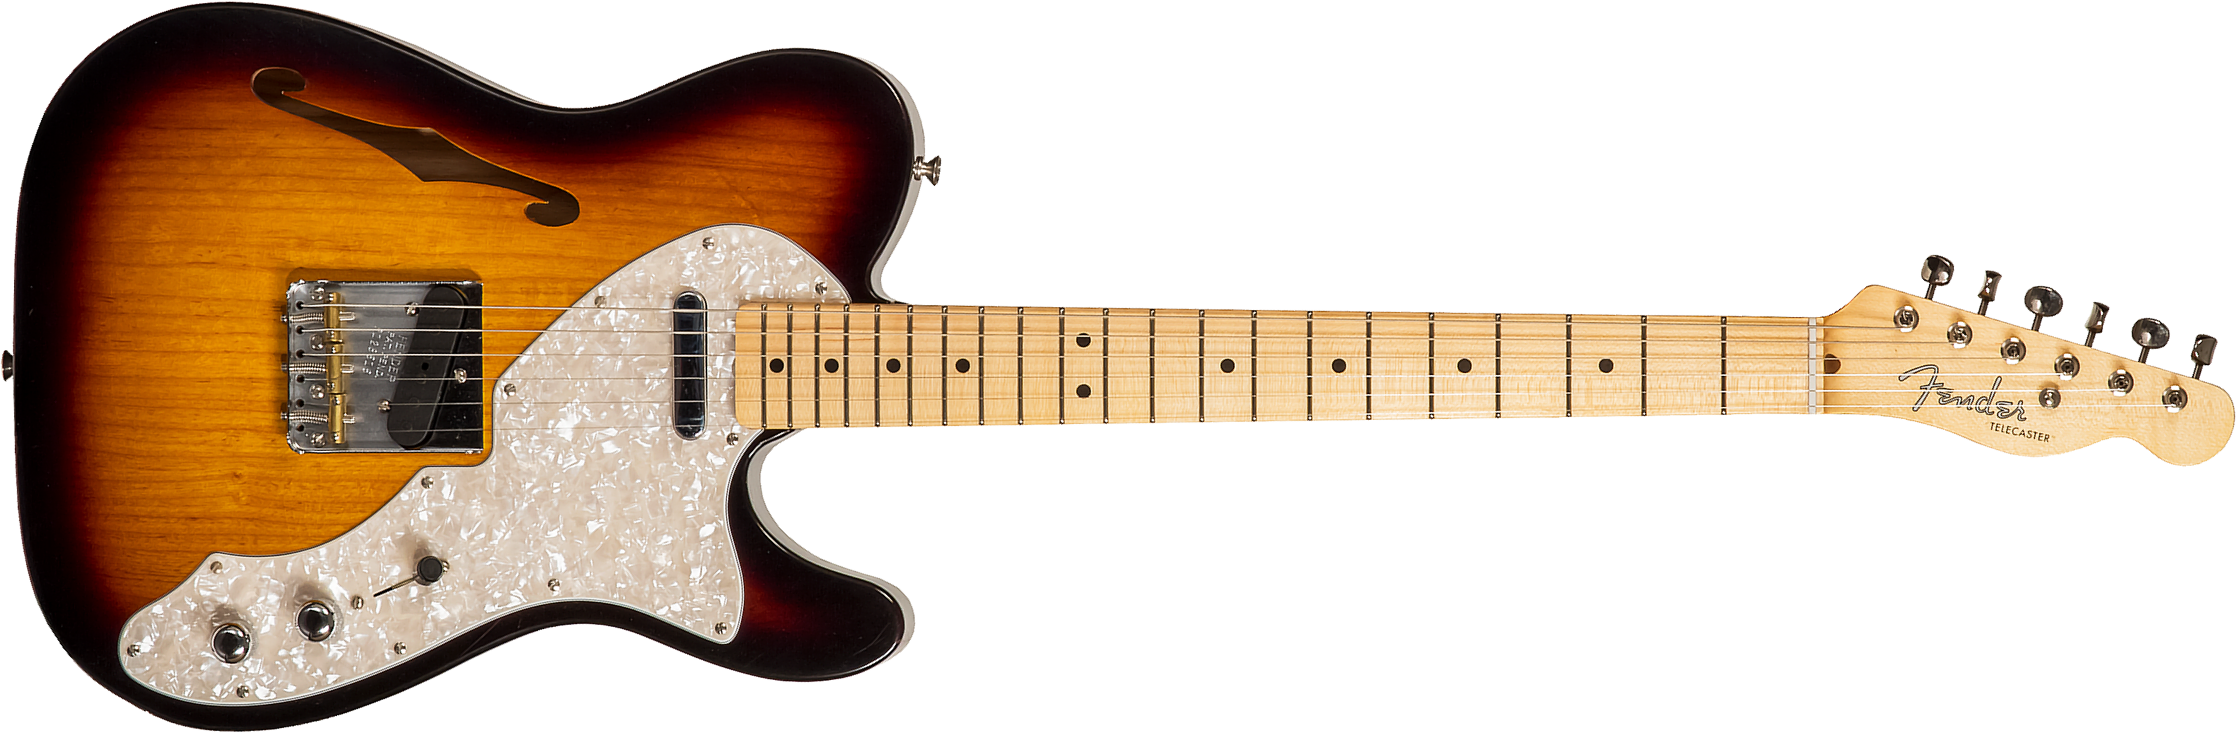 Fender Custom Shop Tele Thinline '50s 2s Ht Mn #r128616 - Closet Classic 2-color Sunburst - Televorm elektrische gitaar - Main picture